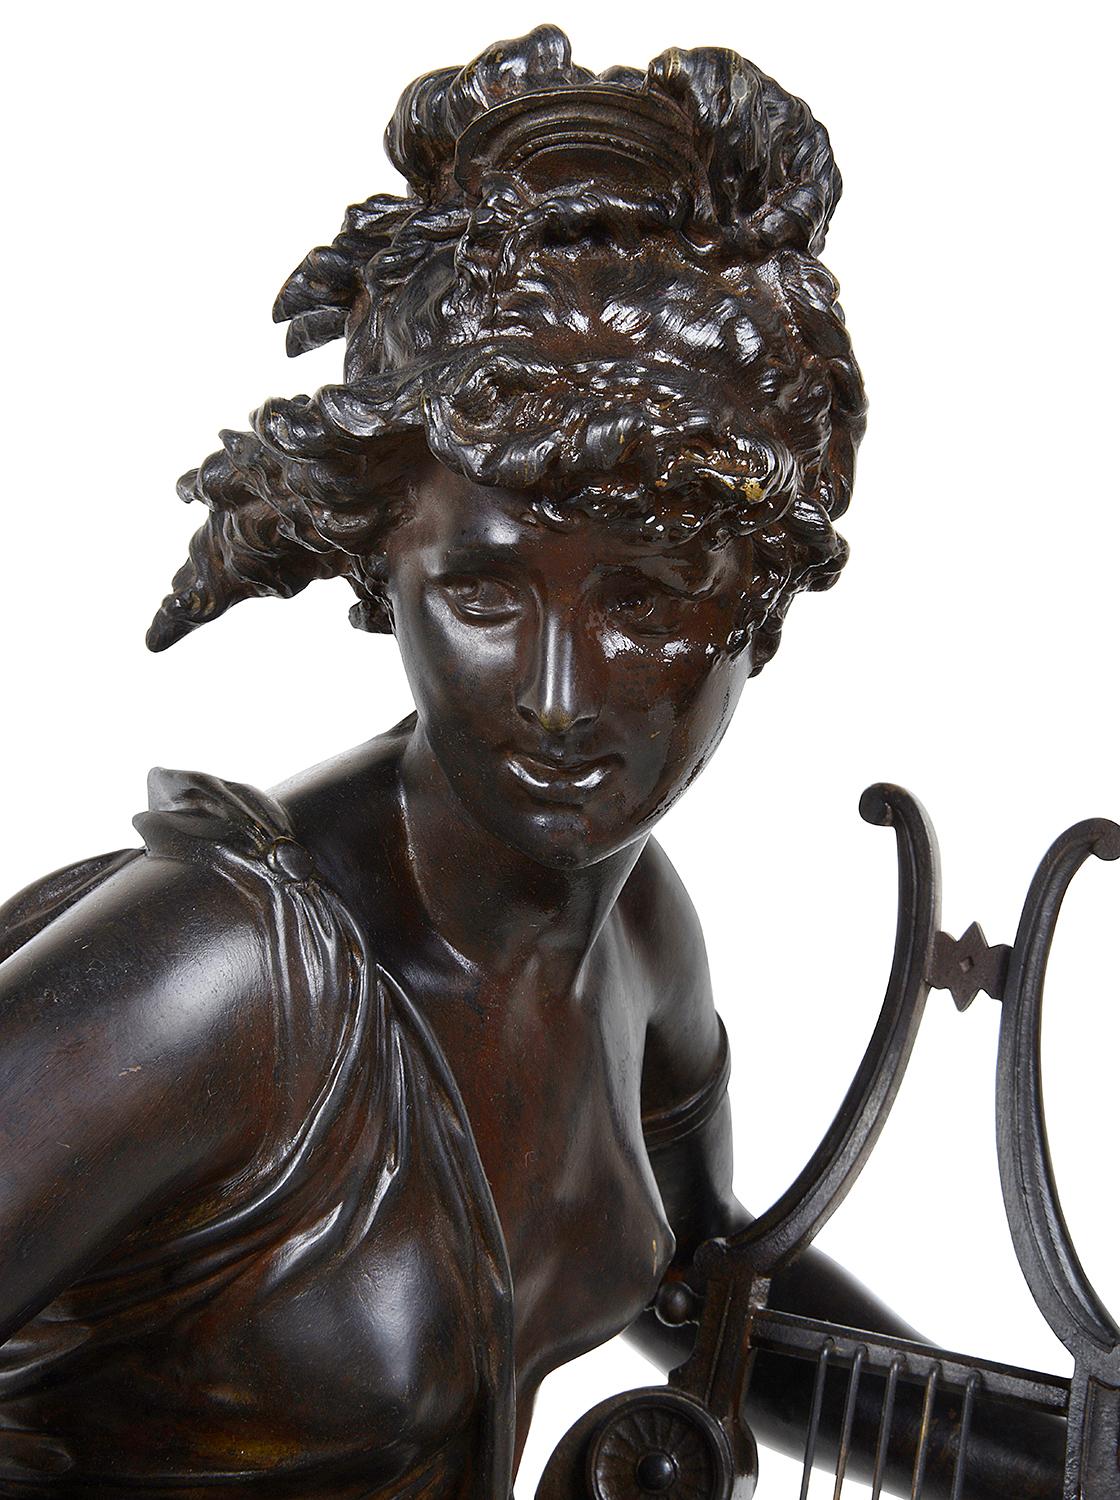 A very good quality 19th century bronze statue of a female figure holding a Harp, entitled 'Harmone'
Signed; Albert-Ernest Carrier-Belleuse

Albert-Ernest Carrier-Belleuse (born Albert-Ernest Carrier de Belleuse; 12 June 1824 – 4 June 1887) was a